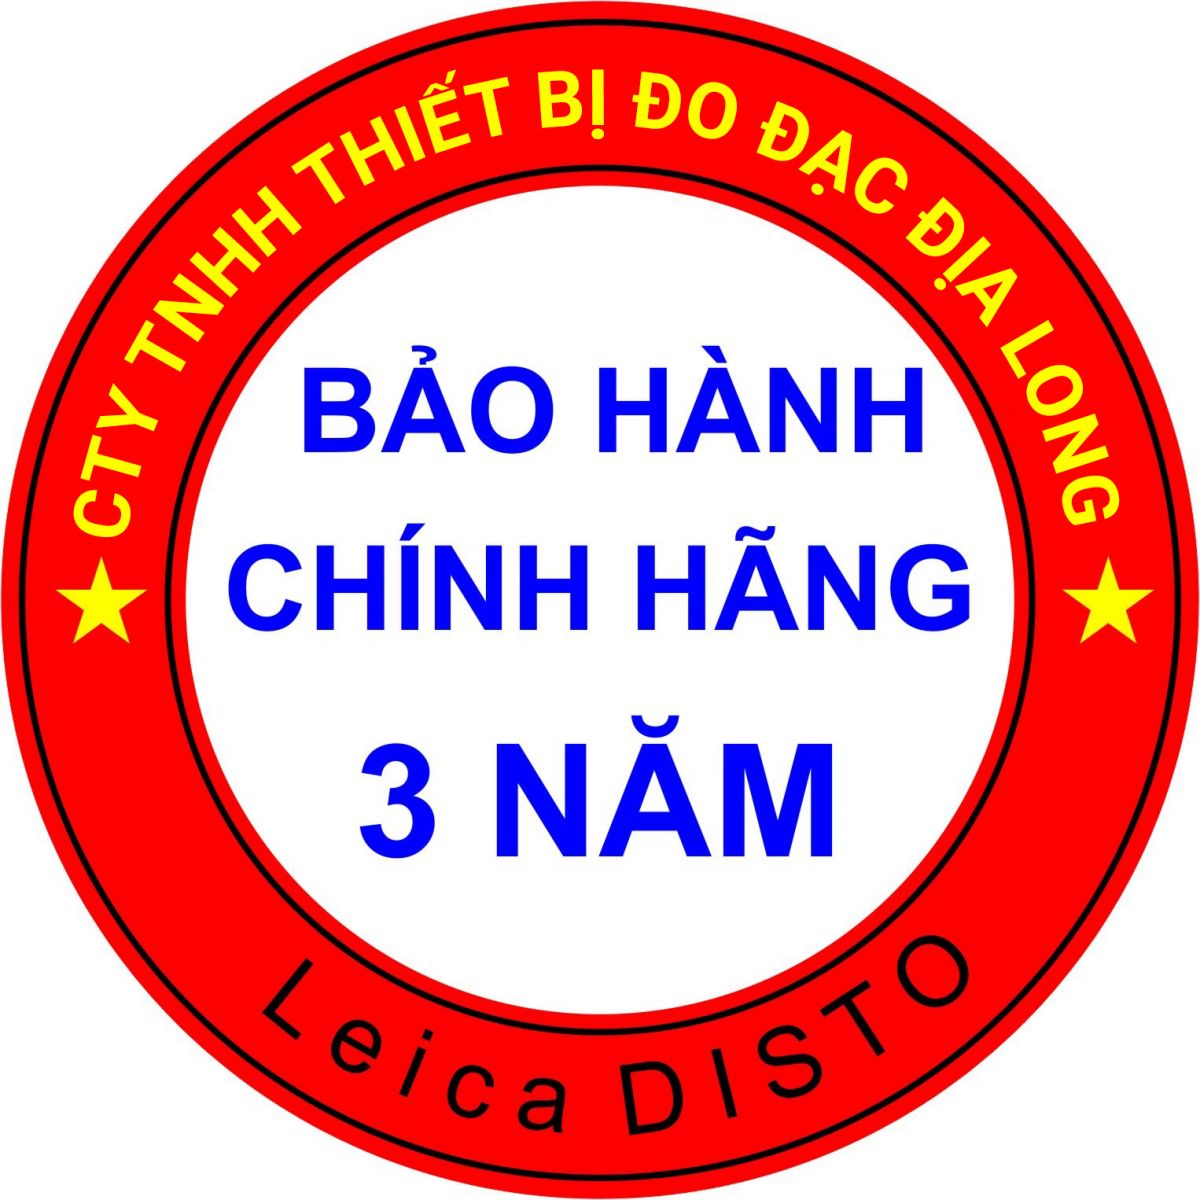 LEICA D2 BAO HANH 3 NAM